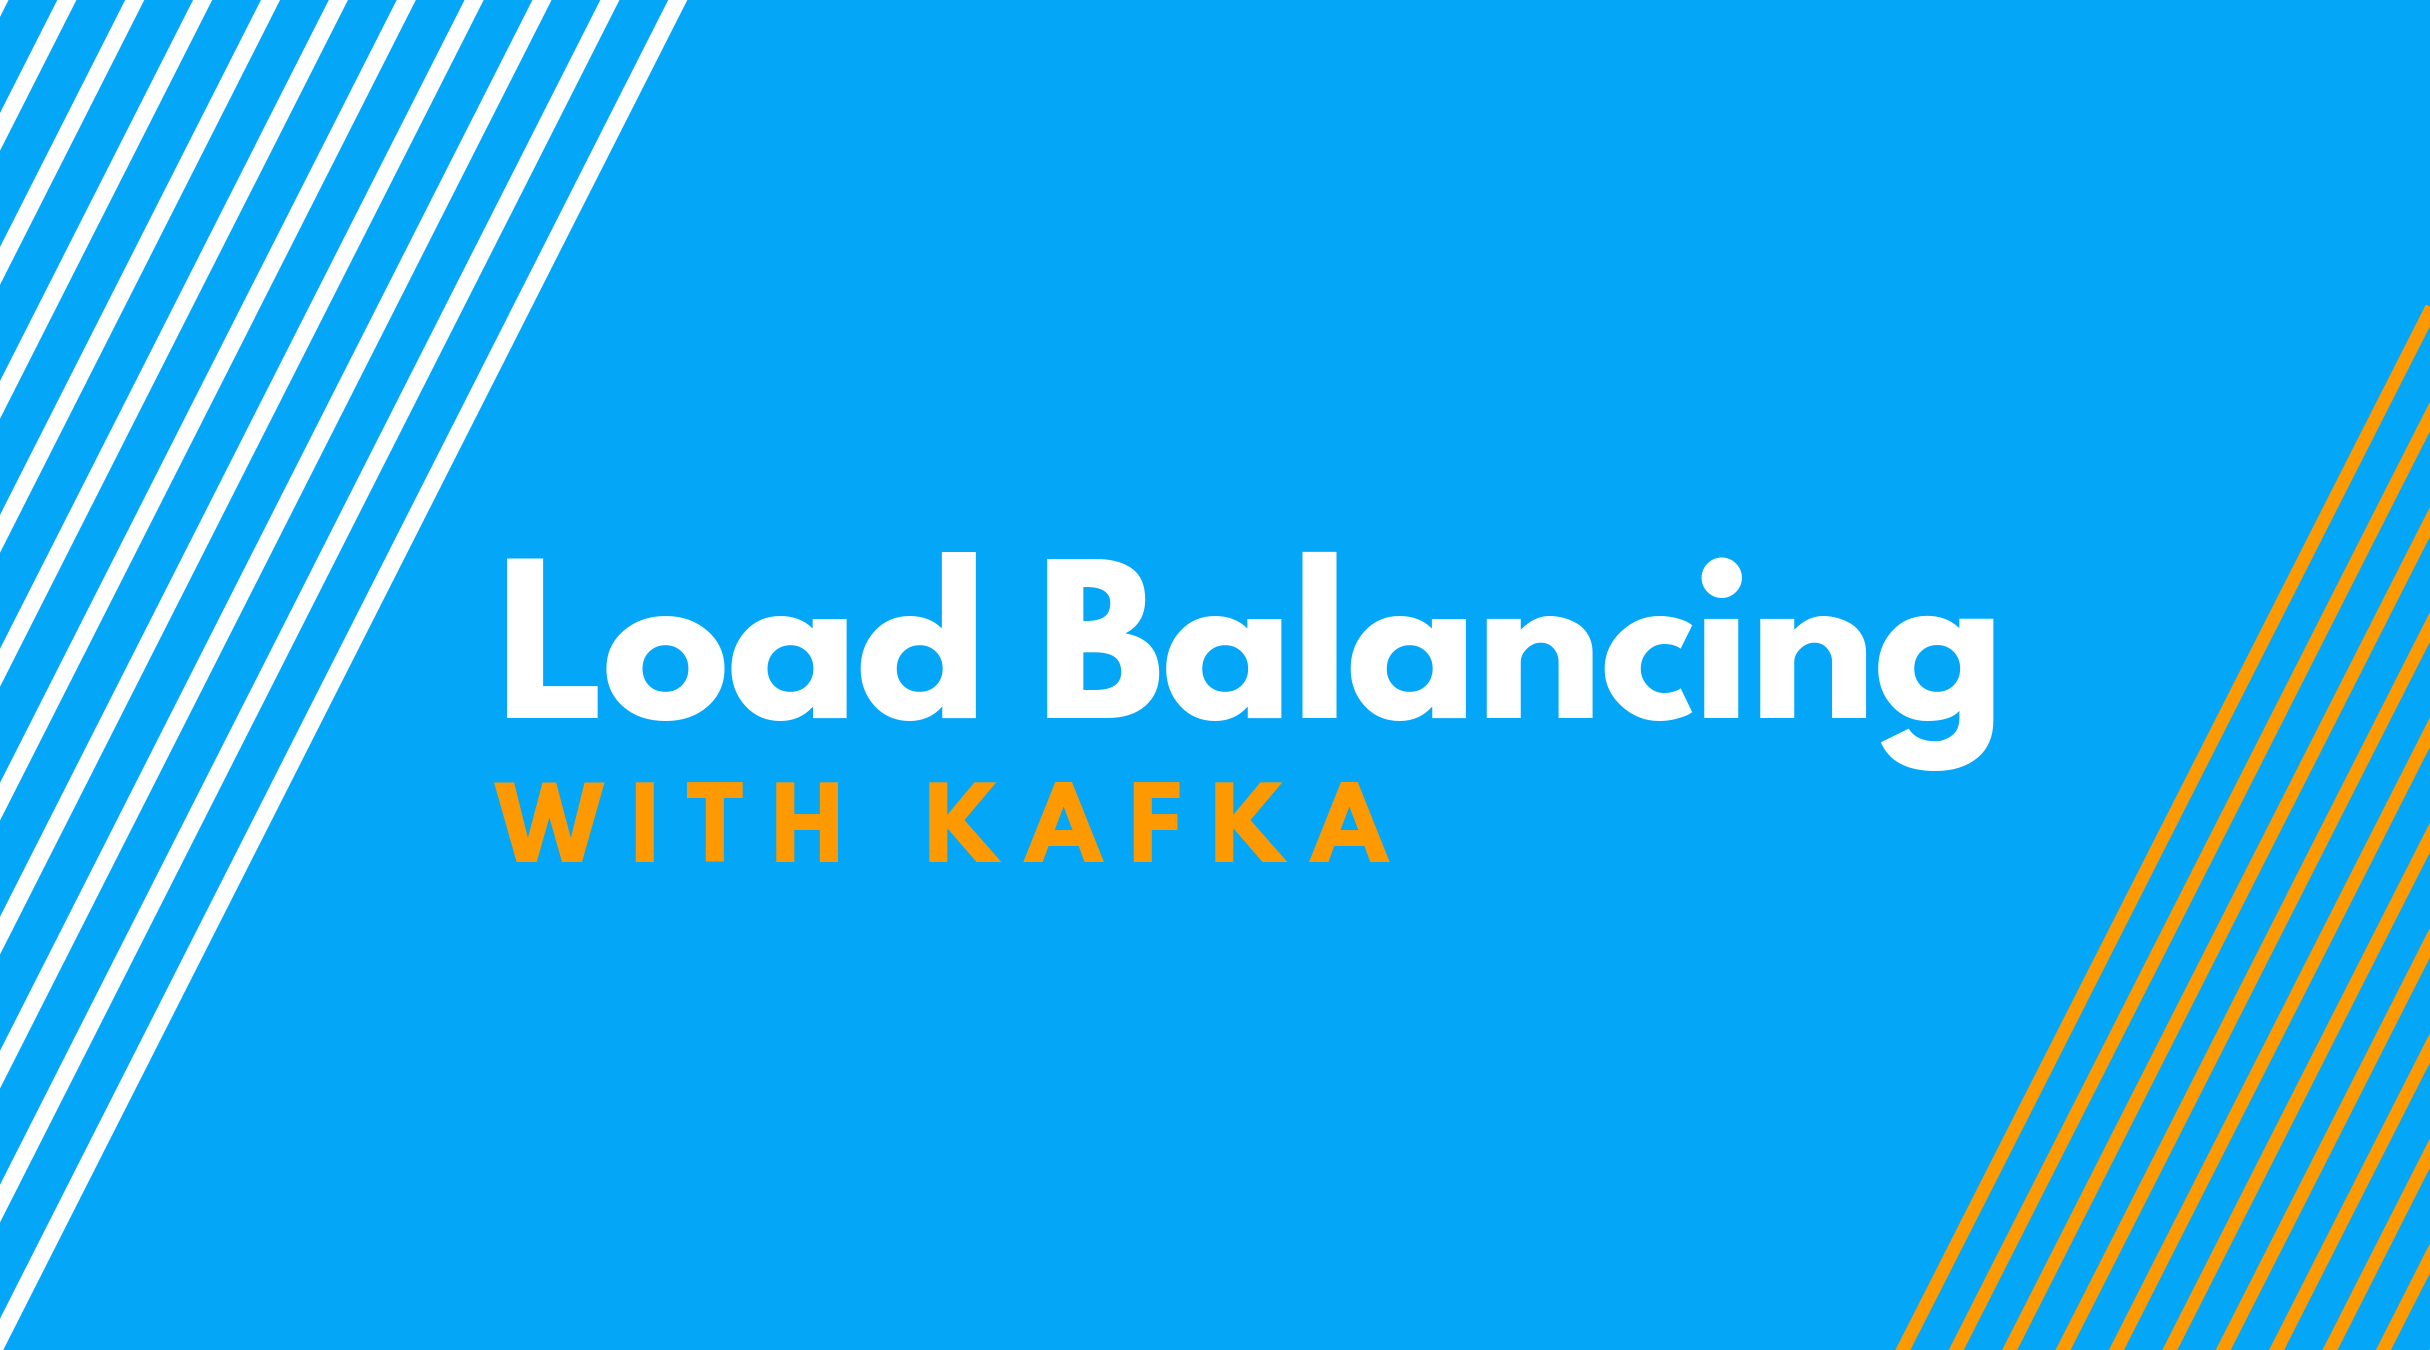 The image reads, "Load Balancing with Kafka."